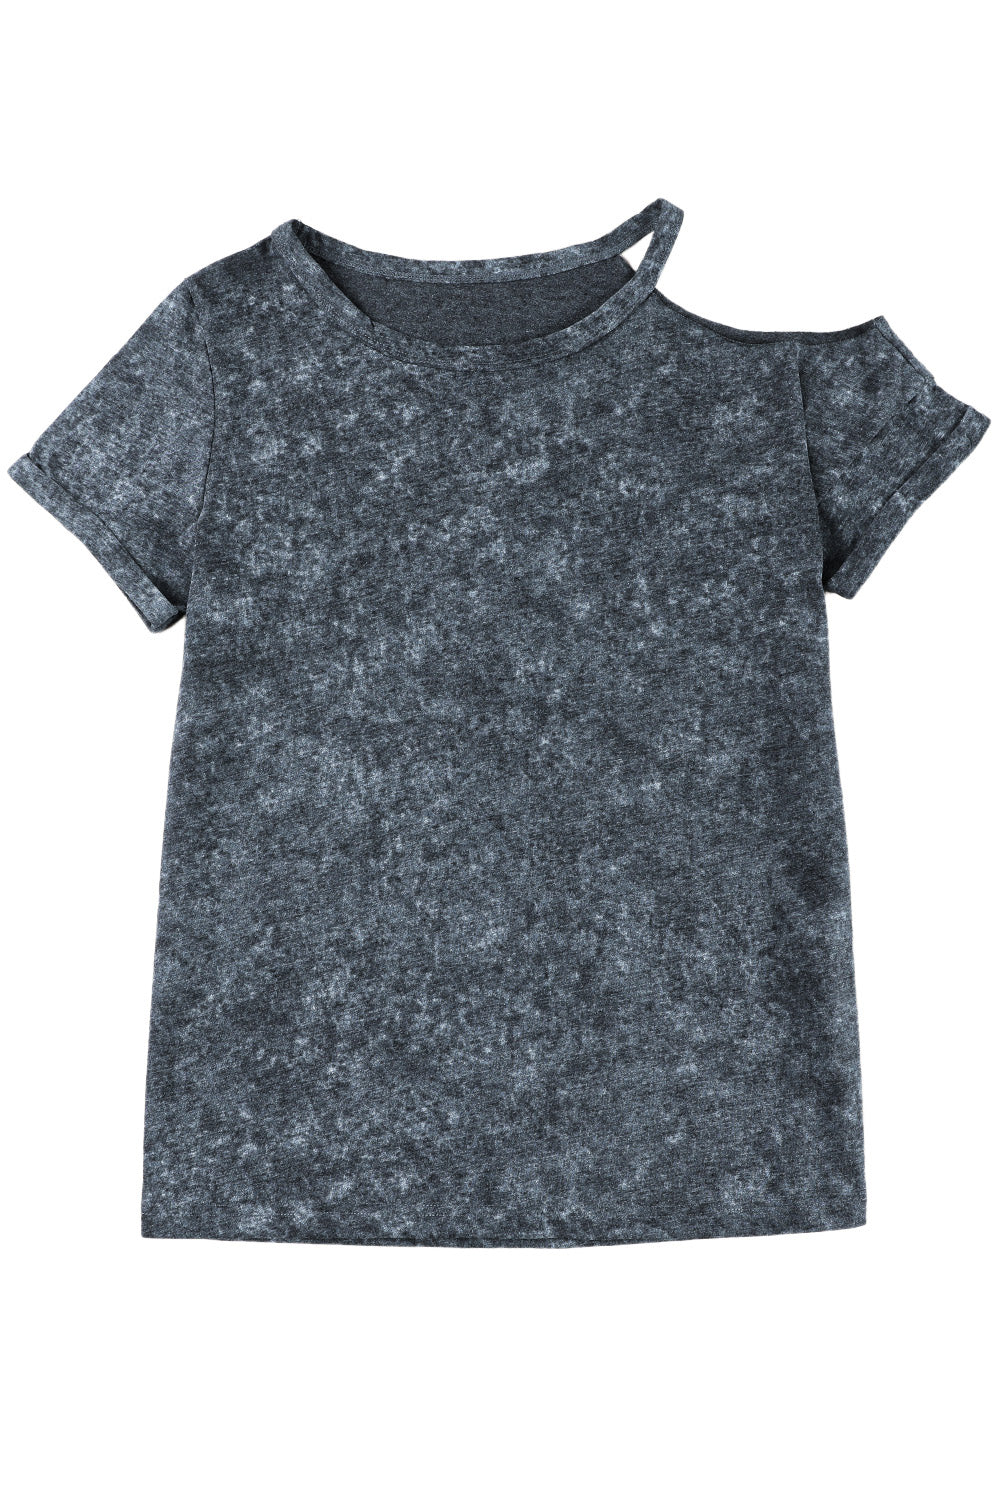 T-shirt grigia vintage asimmetrica con spalle scoperte